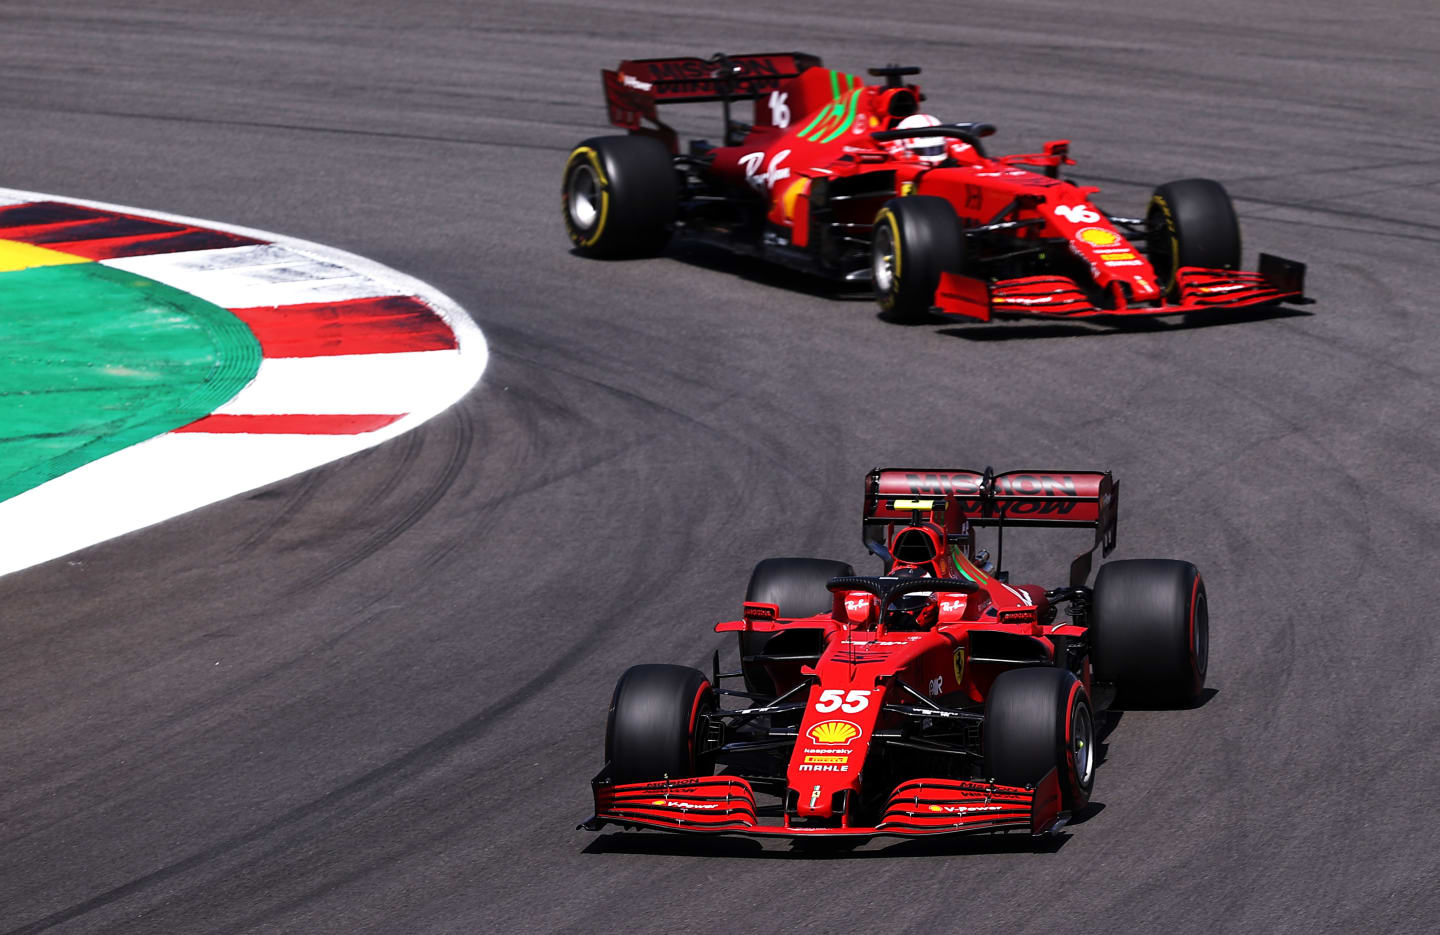 PORTIMAO, PORTUGAL - MAY 02: Carlos Sainz of Spain driving the (55) Scuderia Ferrari SF21 leads